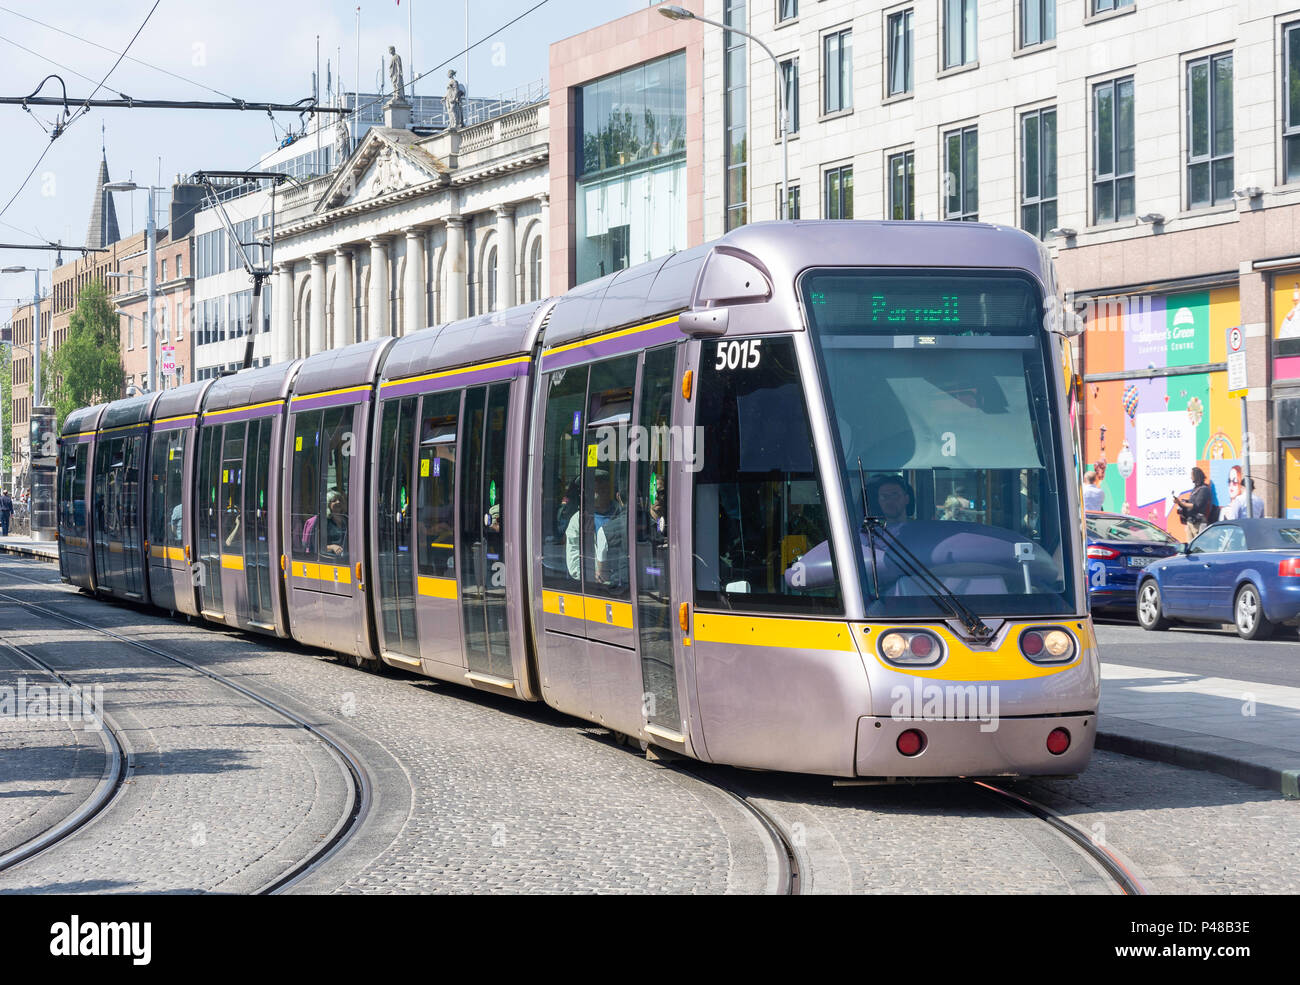 Luas tram/light rail transport system, St Stephen's Green, Dublin, Republic of Ireland Stock Photo